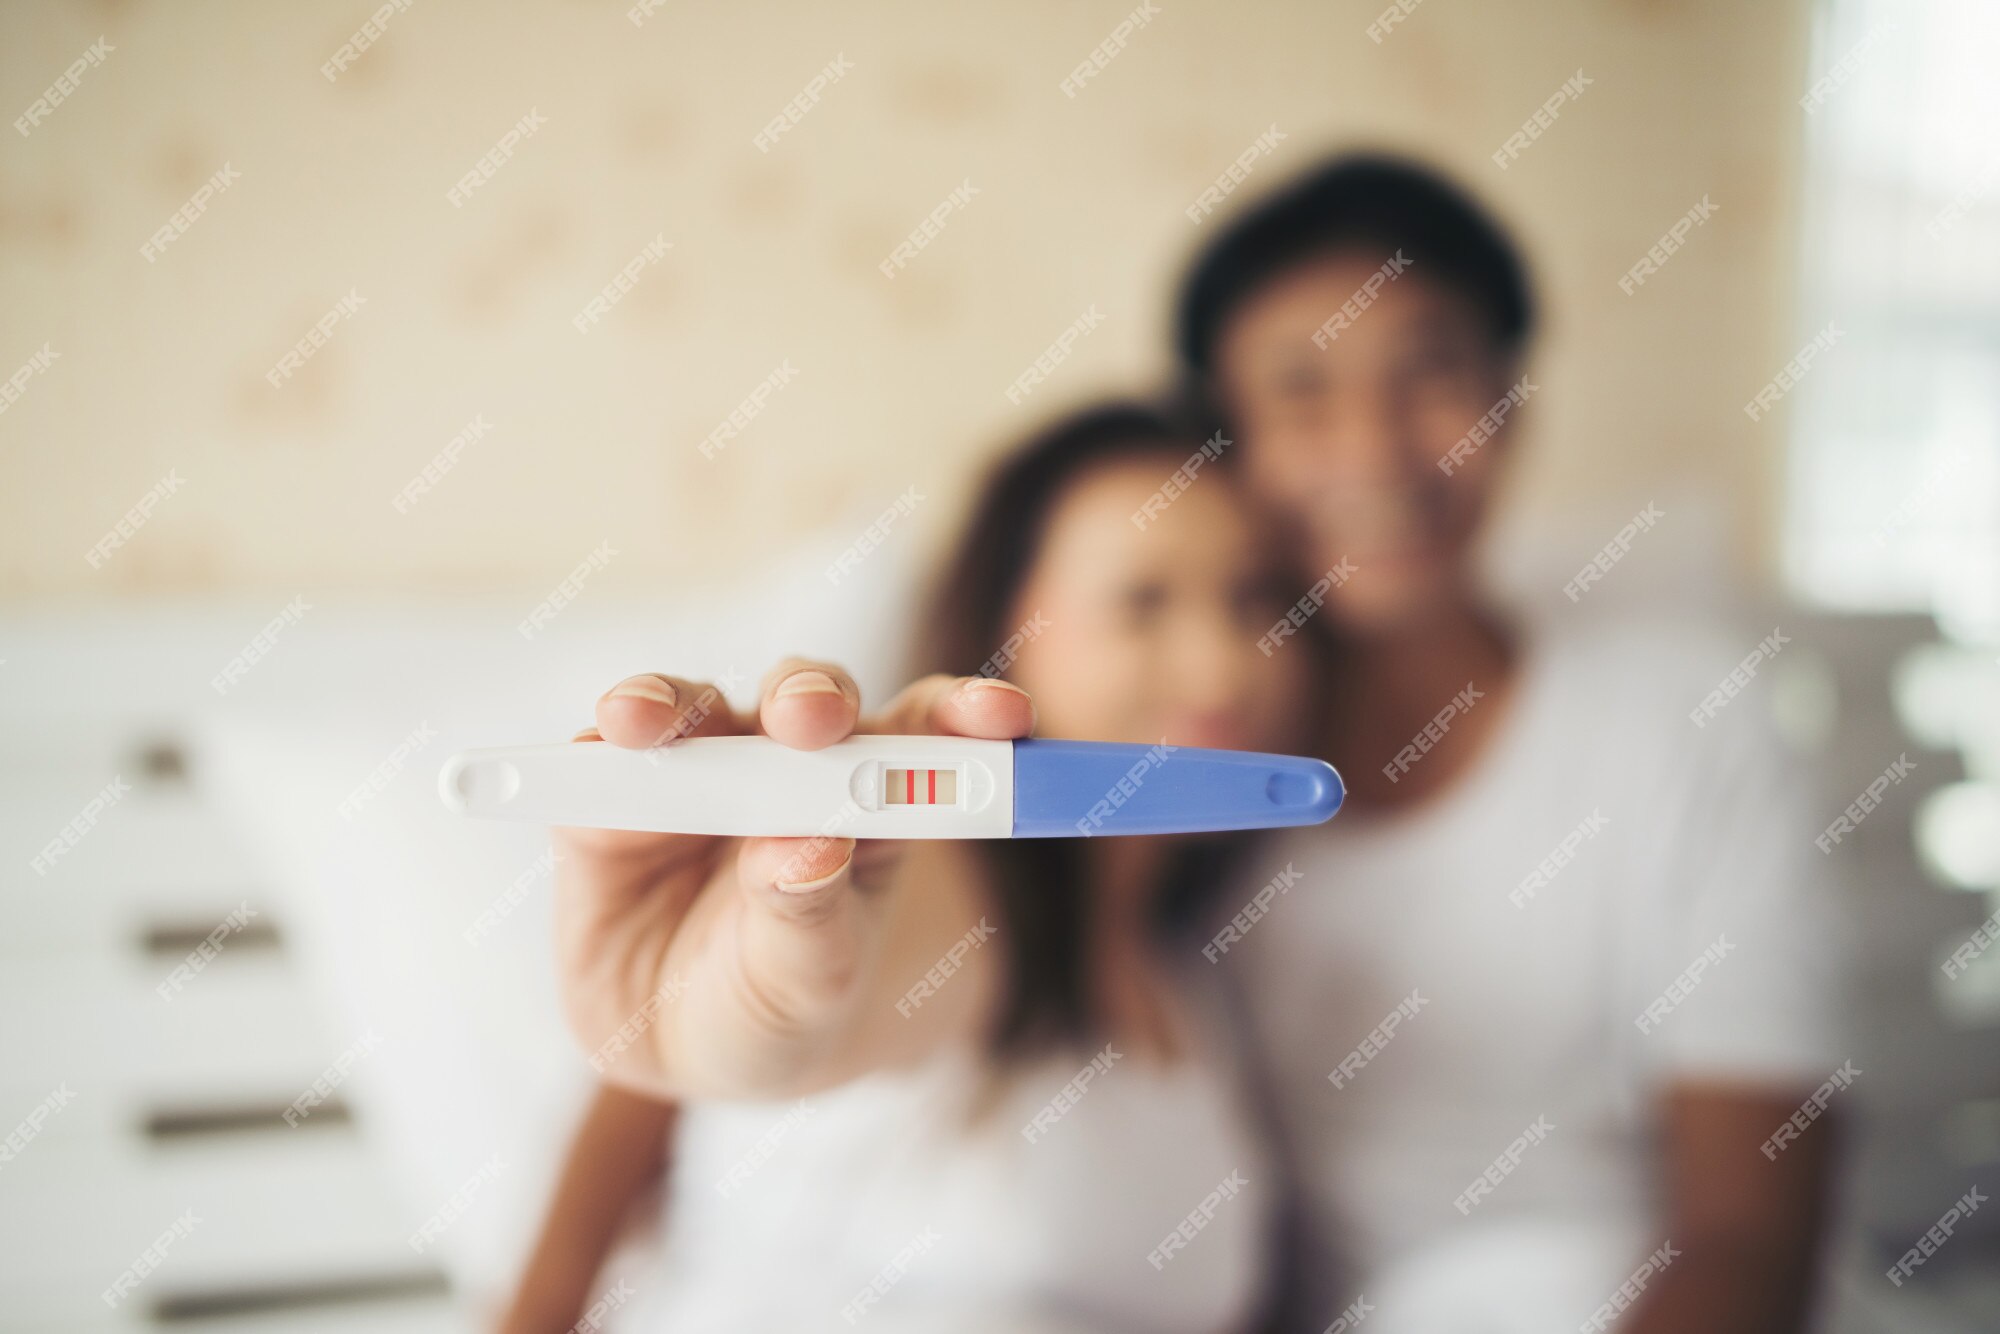 Pregnancy Test Images - Free Download on Freepik